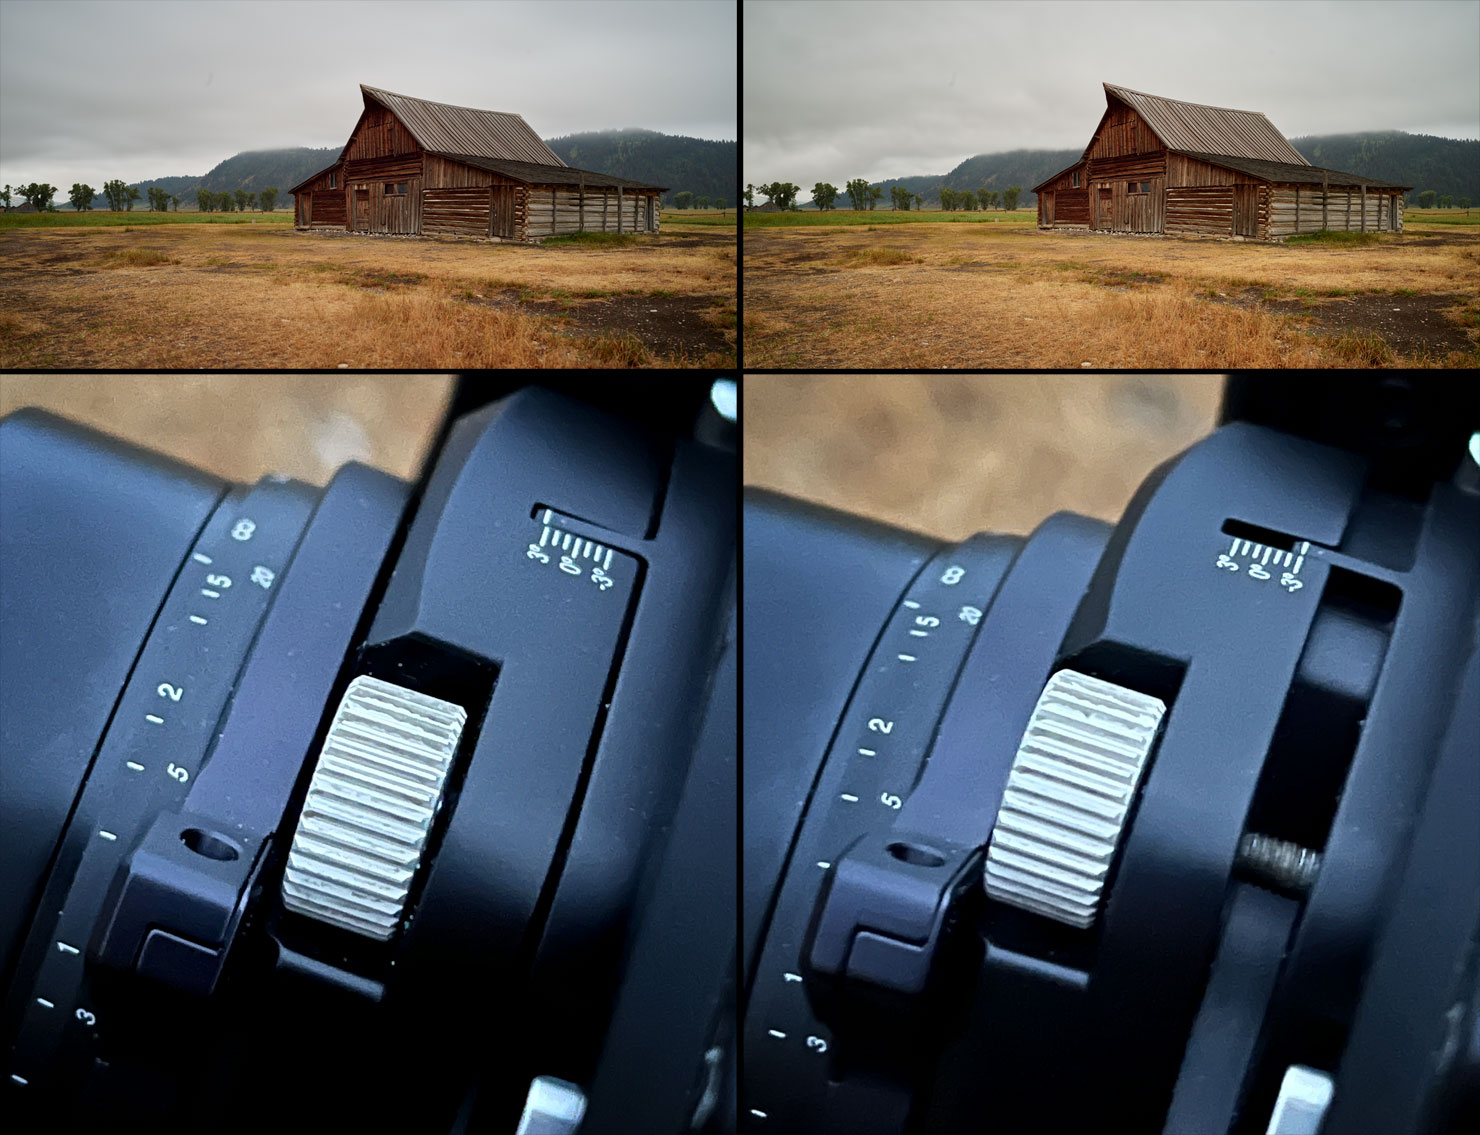 Compare Tilt Lens Rodenstock 40mm minus plus 3 degrees Phase One XT Detail Barn Mormon Row Paul Reiffer Photographer Wyoming Image Focus Focal